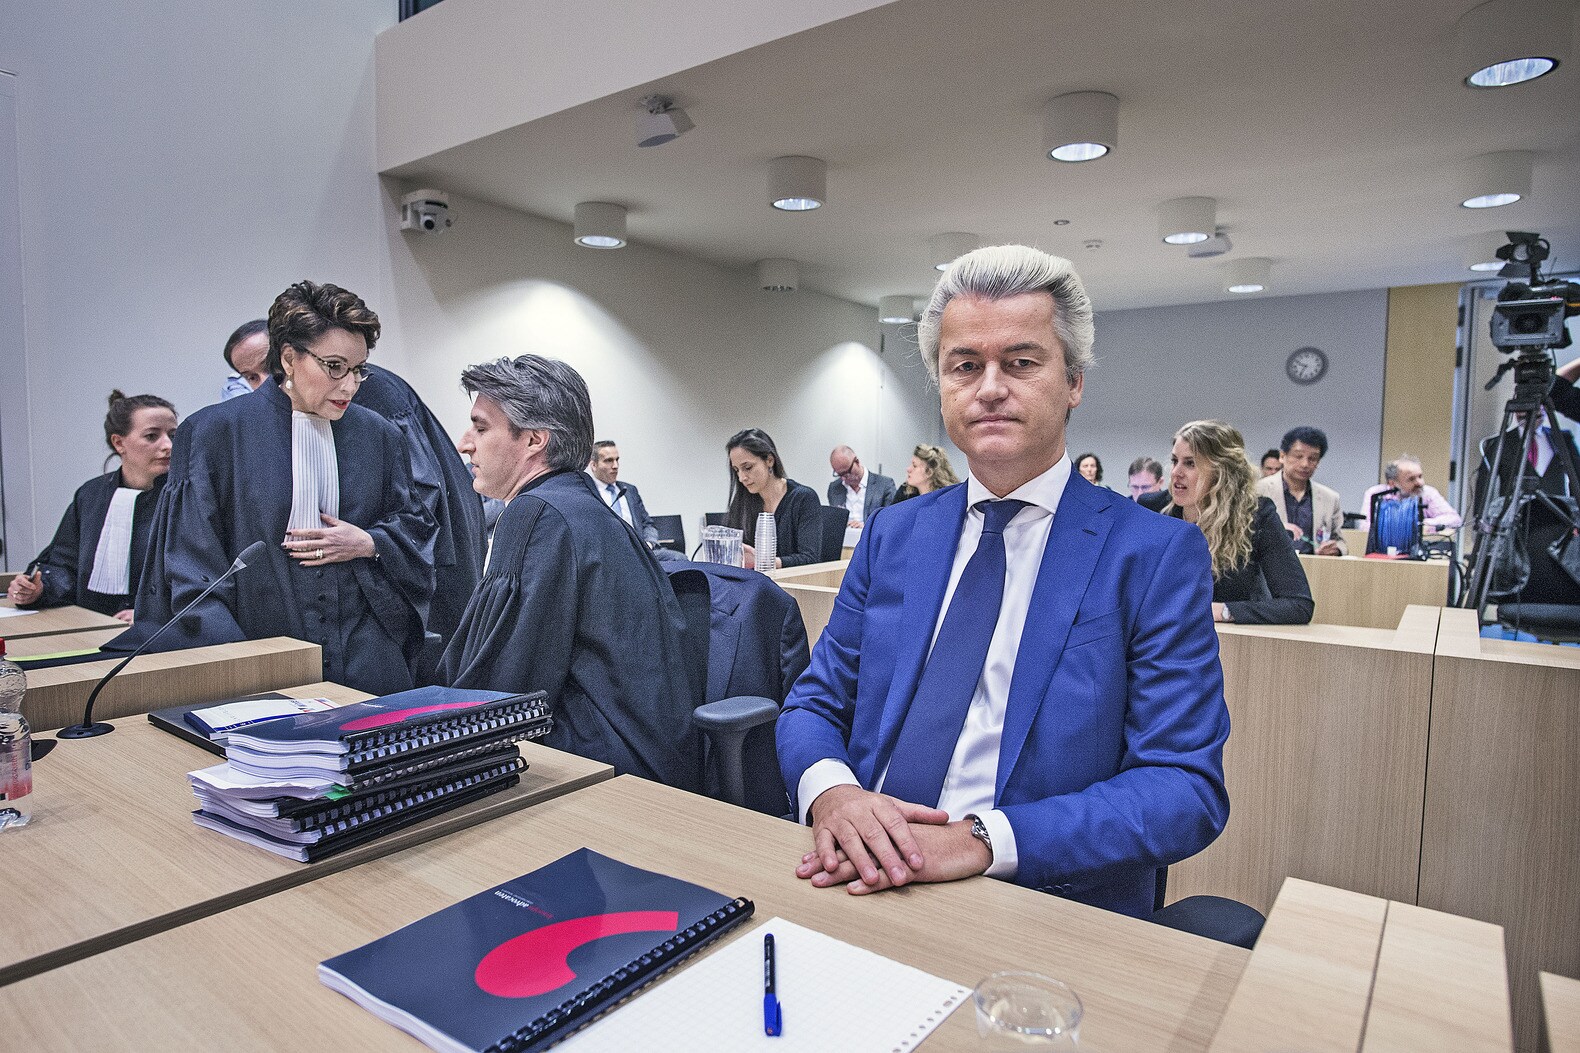 ''Minder, minder'-uitspraak Wilders was bewust gepland'